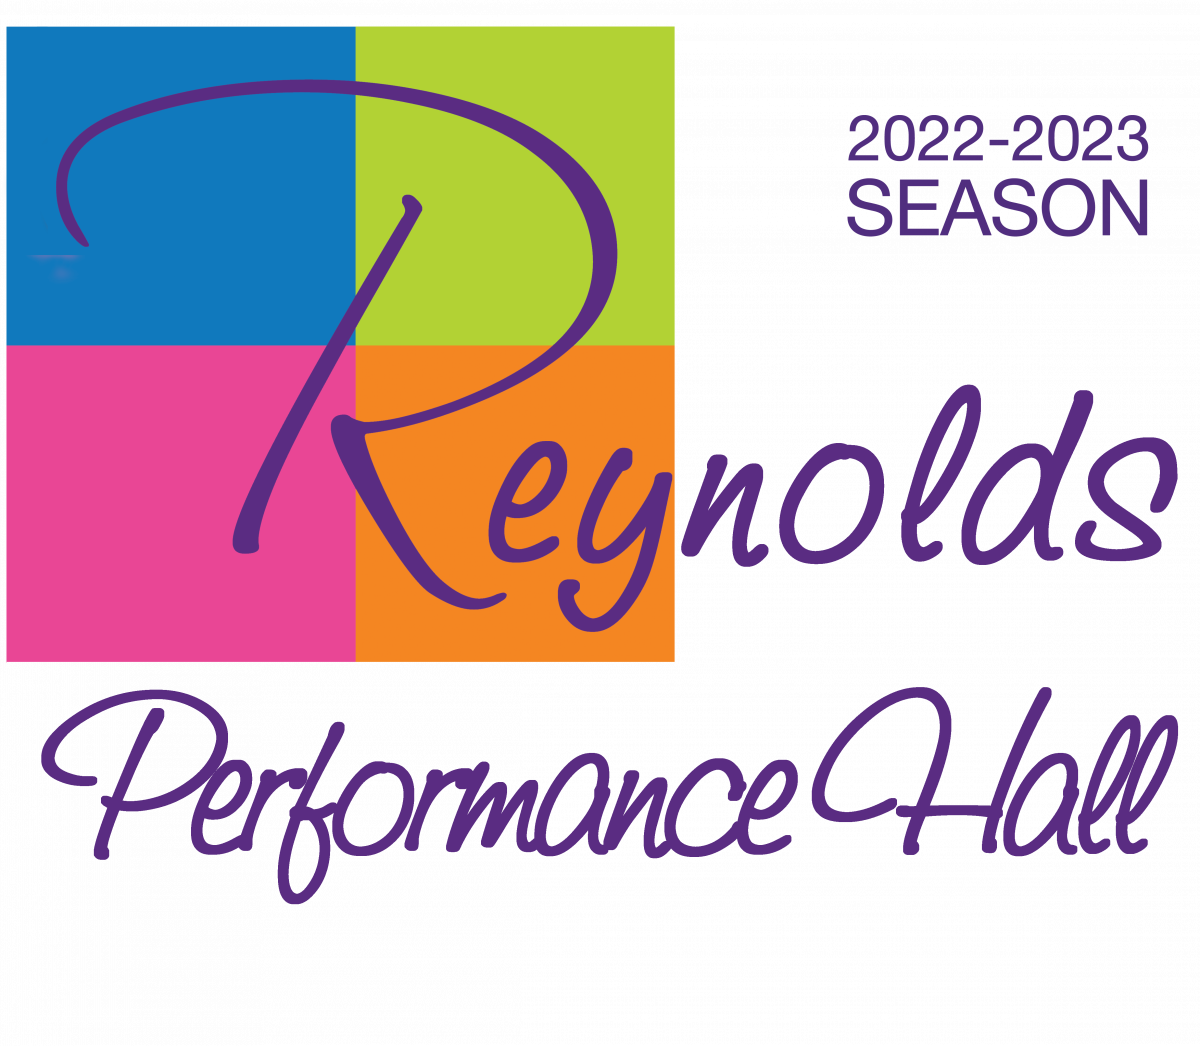 Reynolds Performance Hall 2022-2023 Season